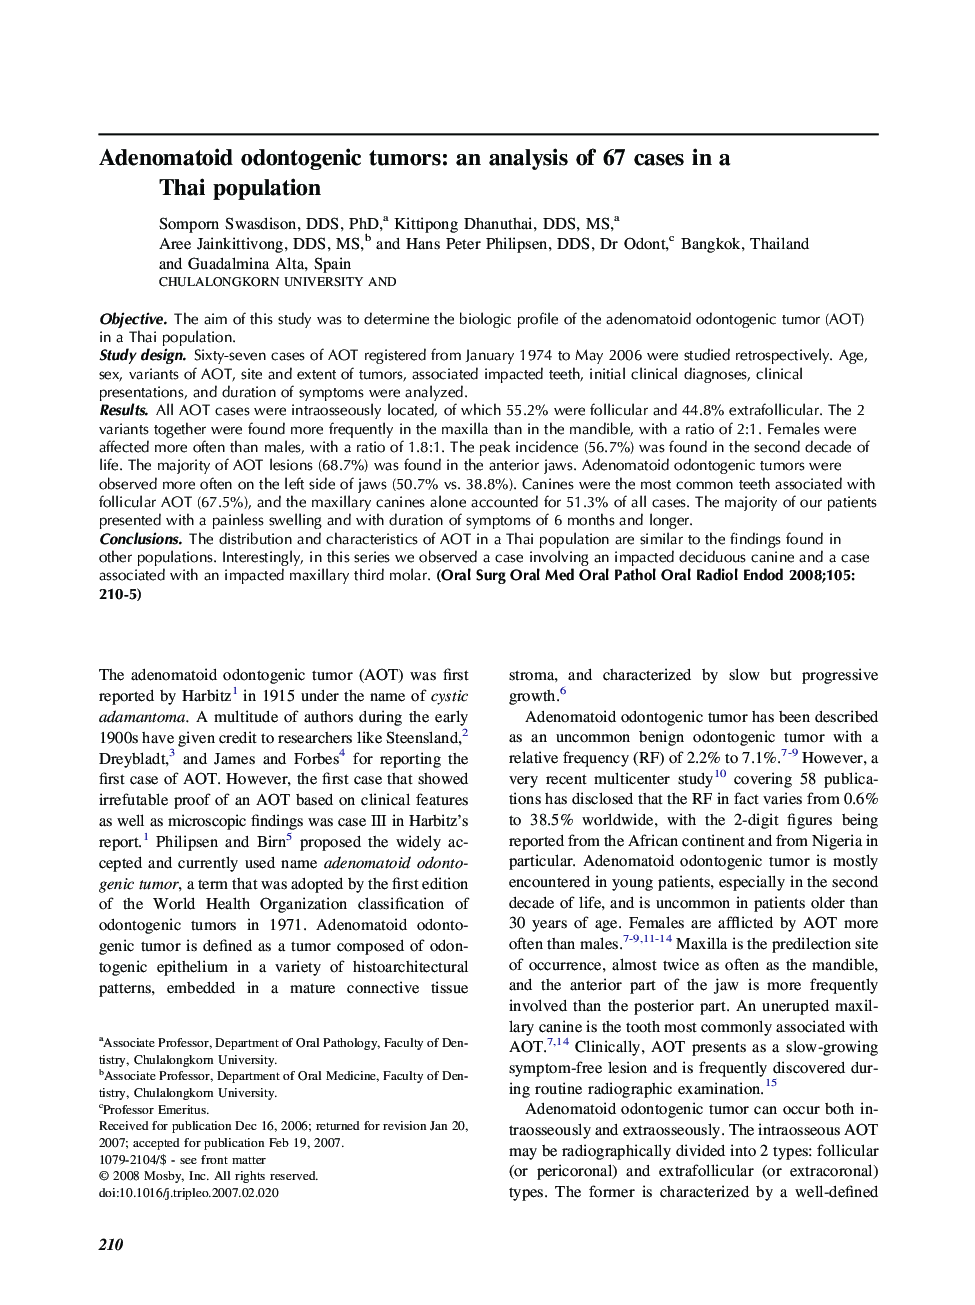 Adenomatoid odontogenic tumors: an analysis of 67 cases in a Thai population